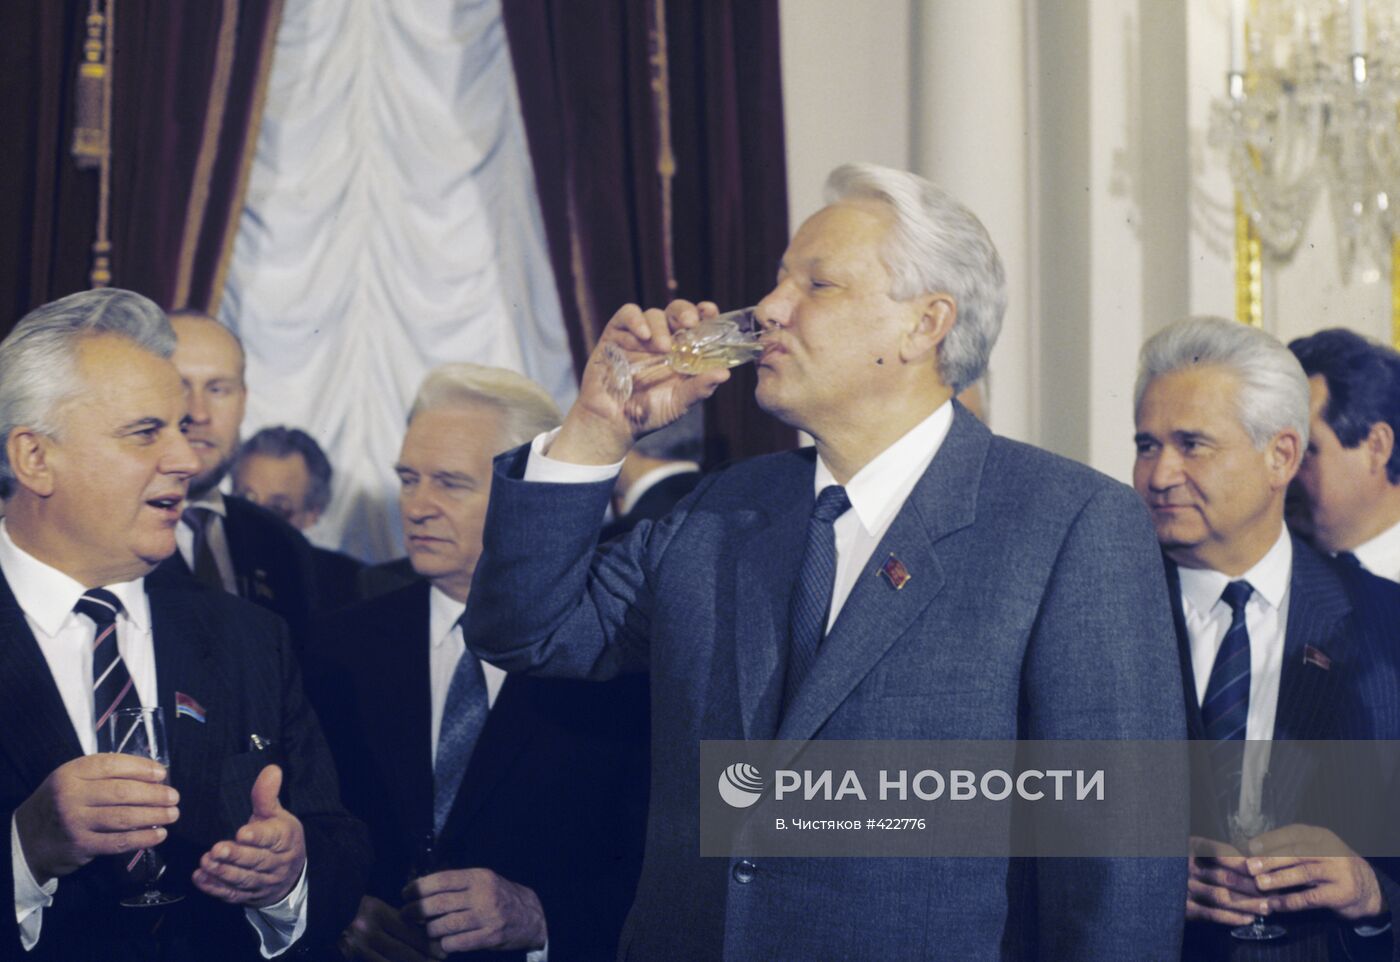 Борис Ельцин и Леонид Кравчук